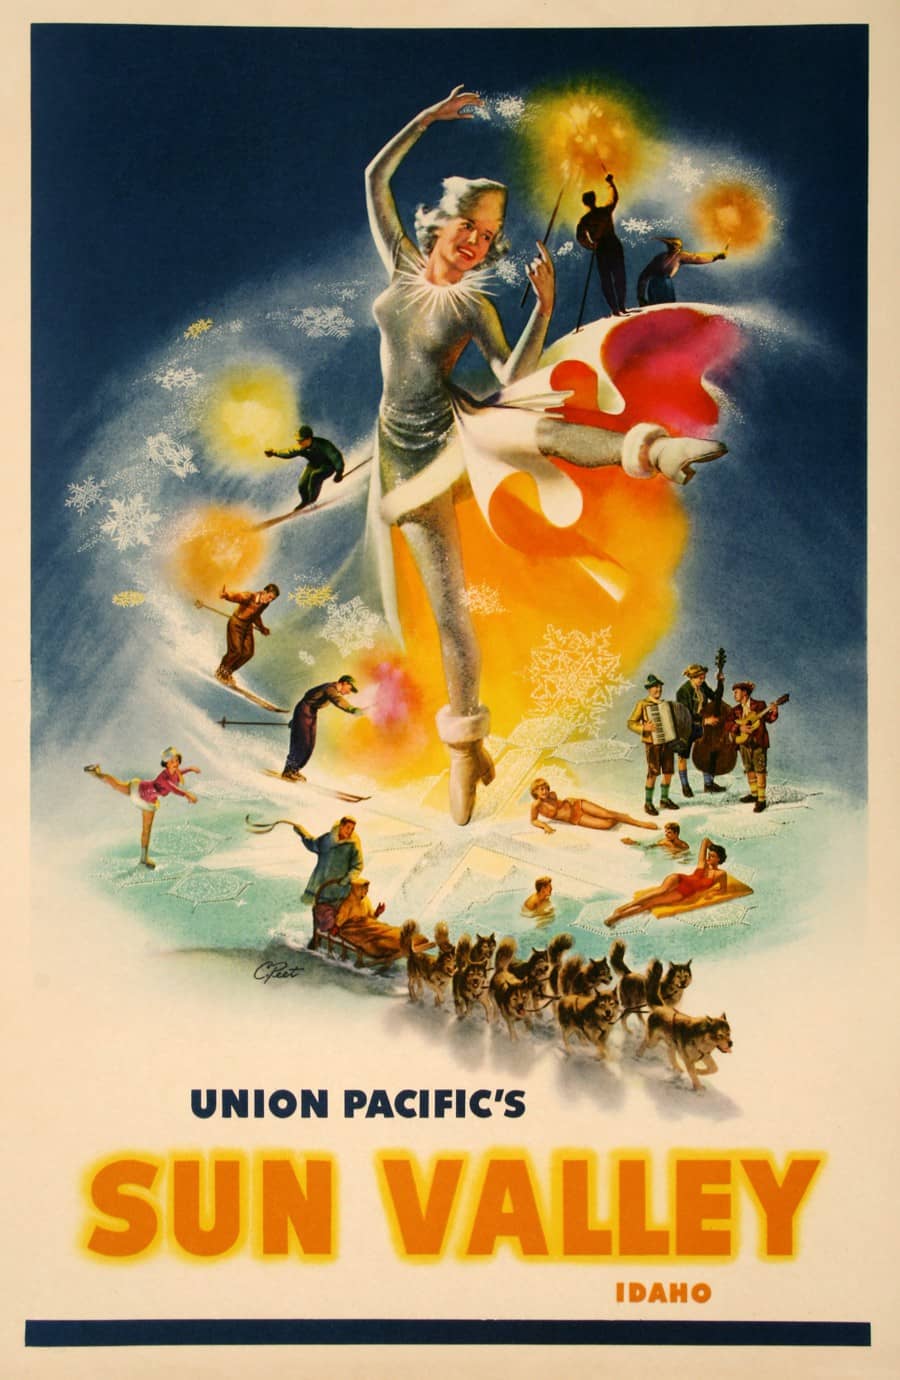 Original Vintage Union Pacific Sun Valley Idaho Poster by Peet 1945